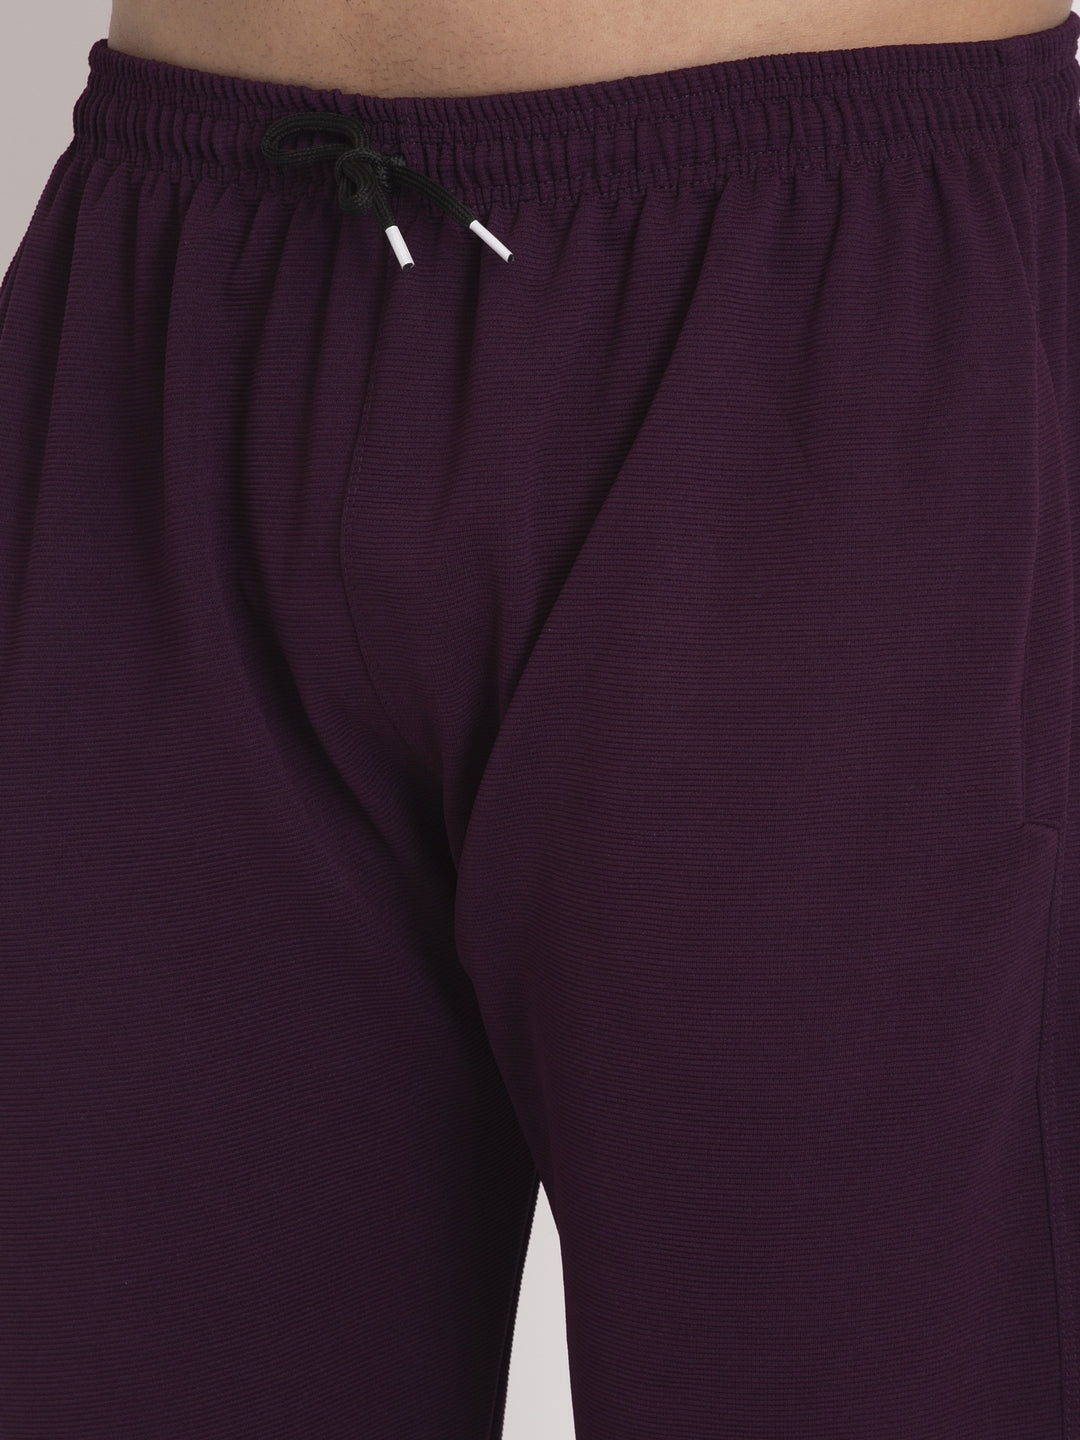 Men's Purple Solid Track Pants ( JOG 014Purple ) - Jainish